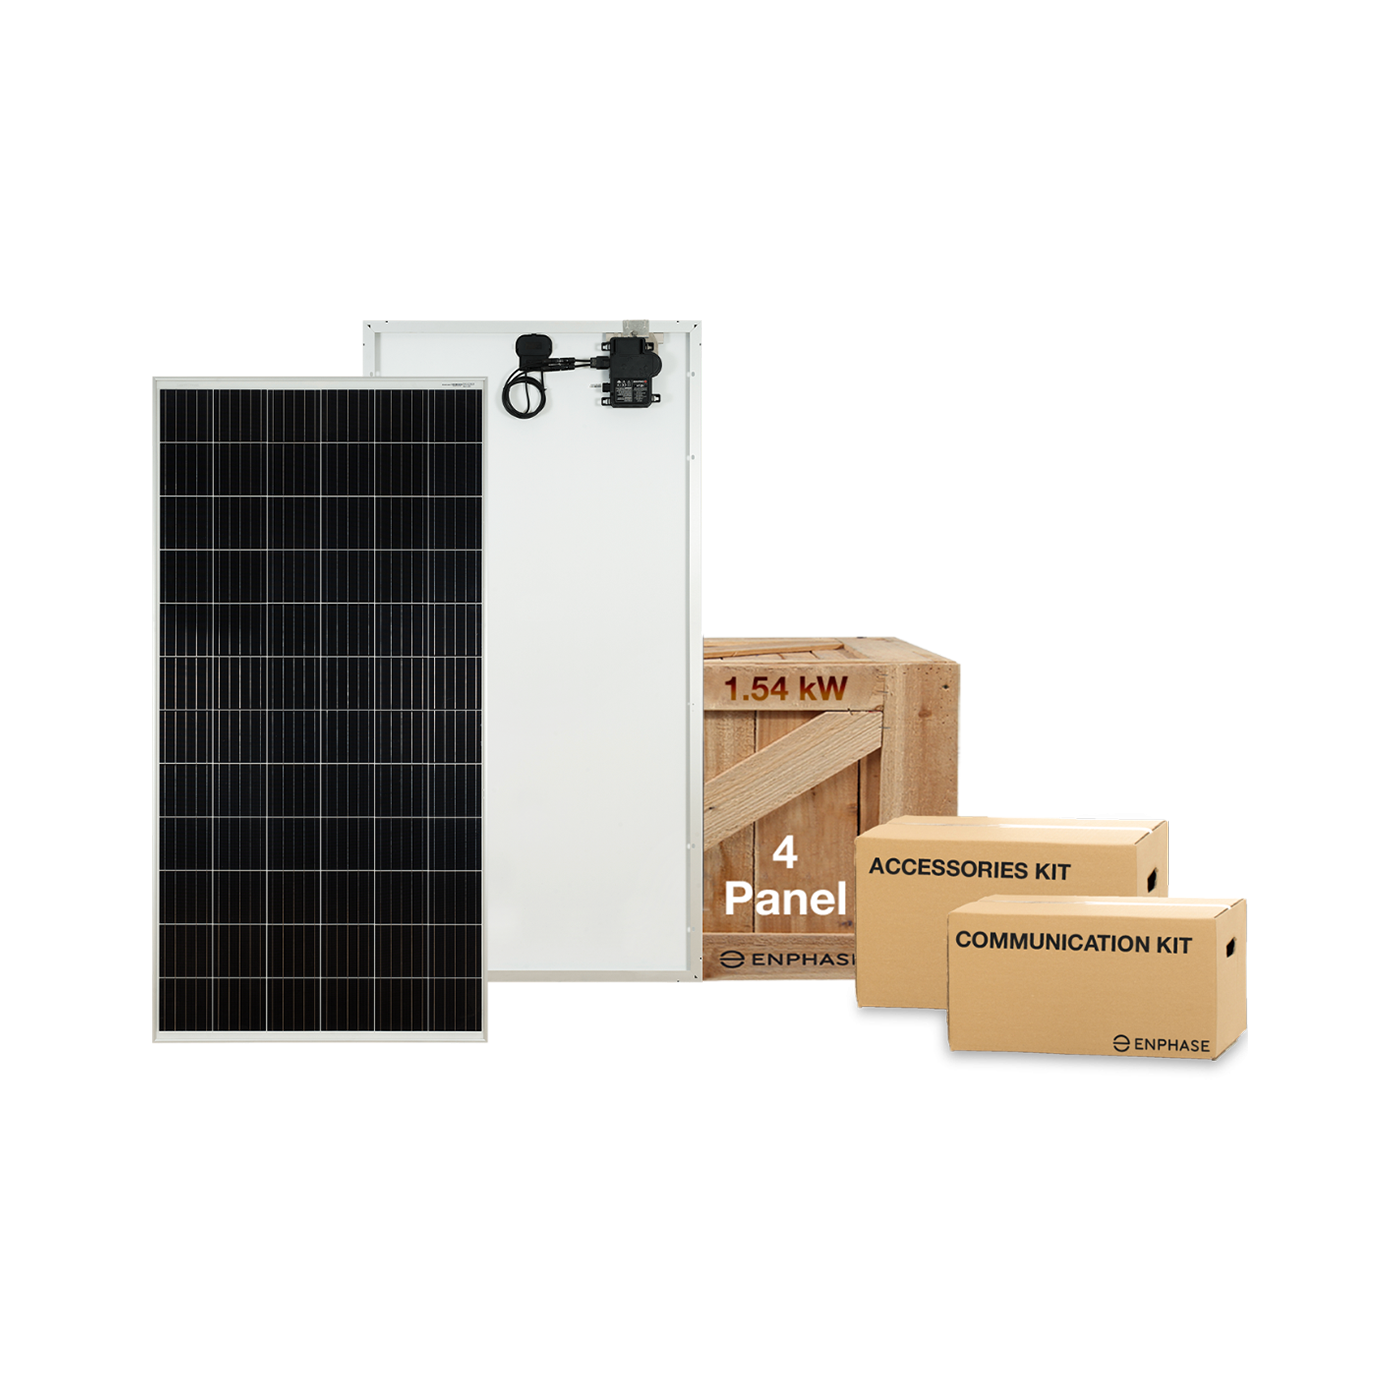 1.54 kW Panasonic Solar System Kit